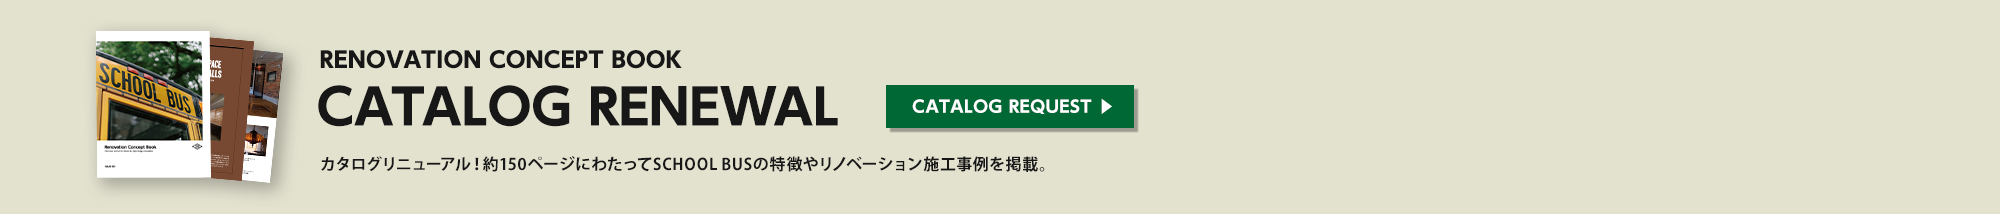 catalog renewal画像